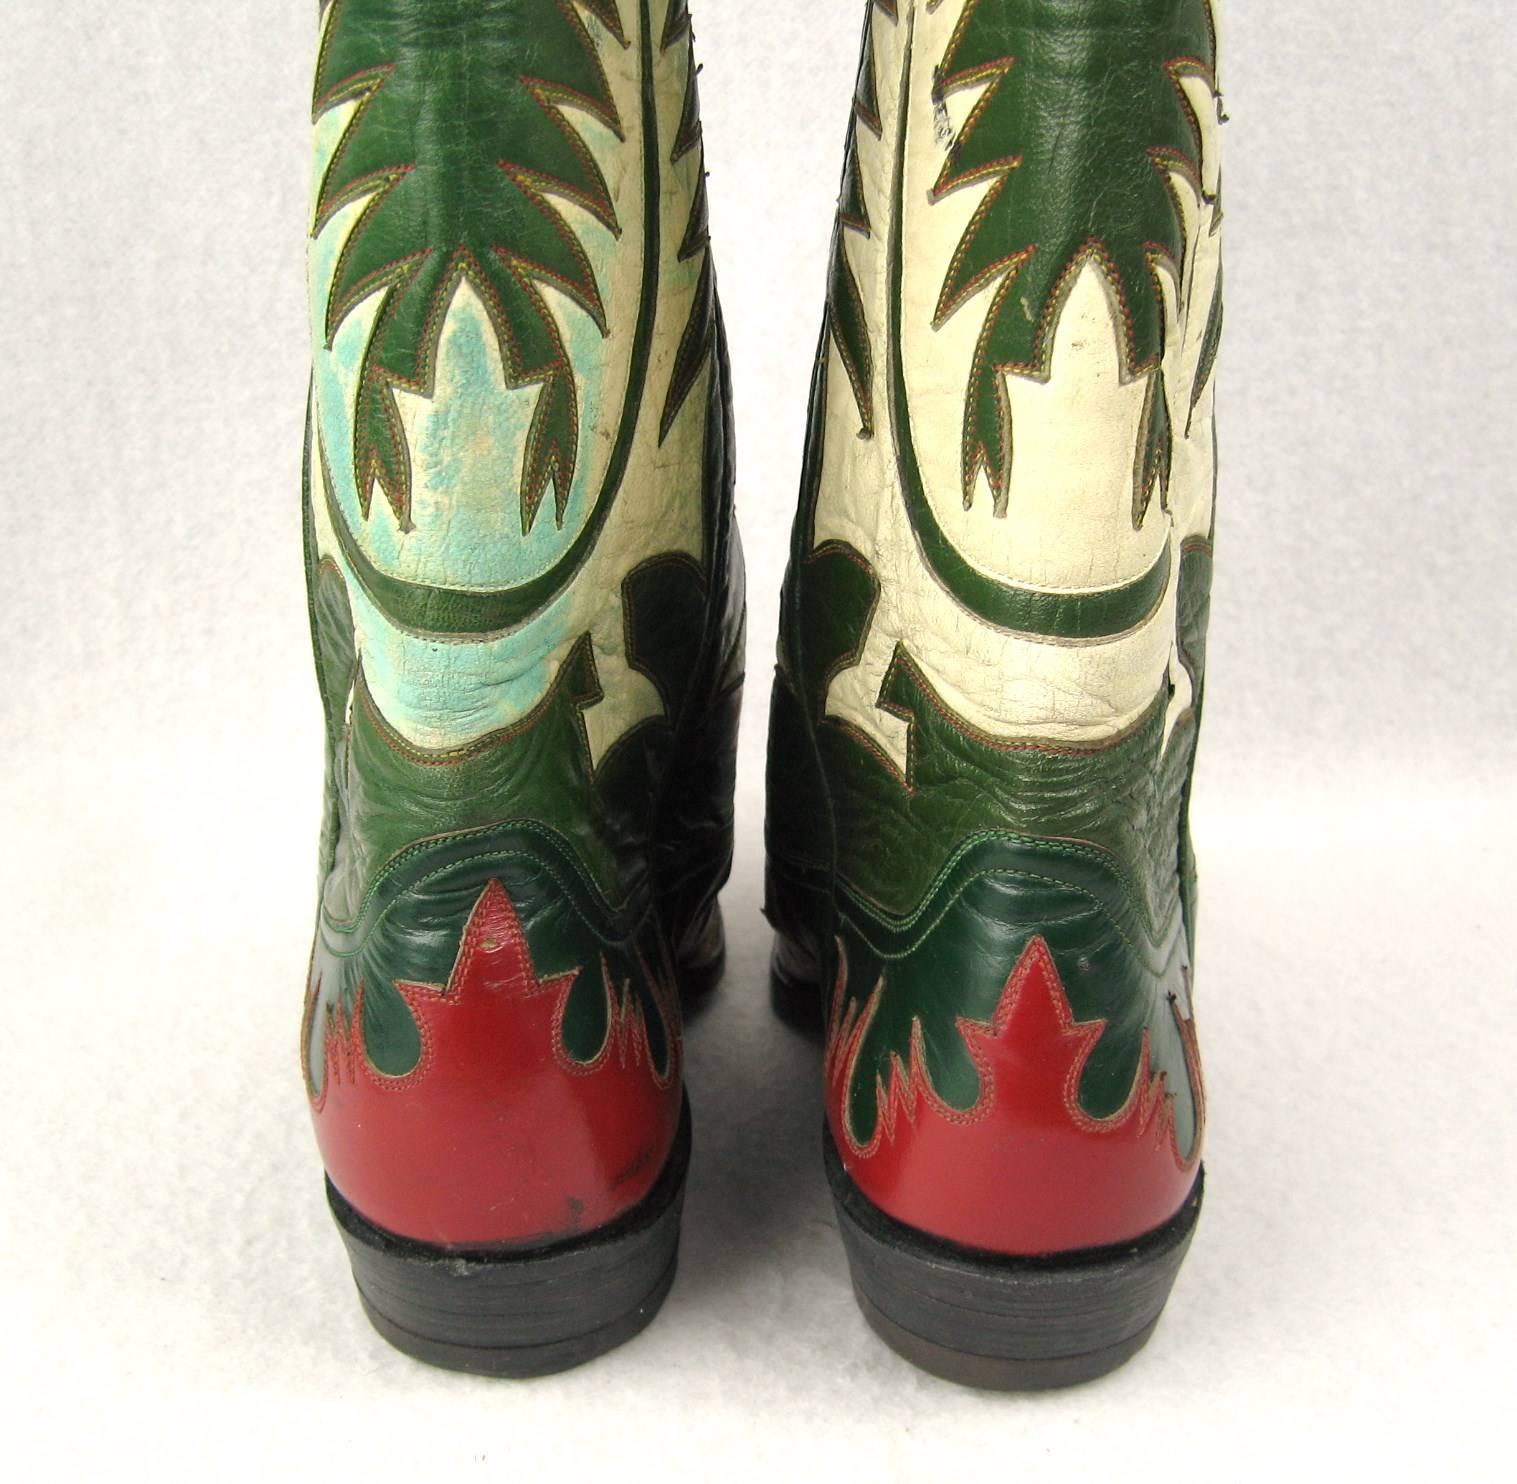 green cowboy boots